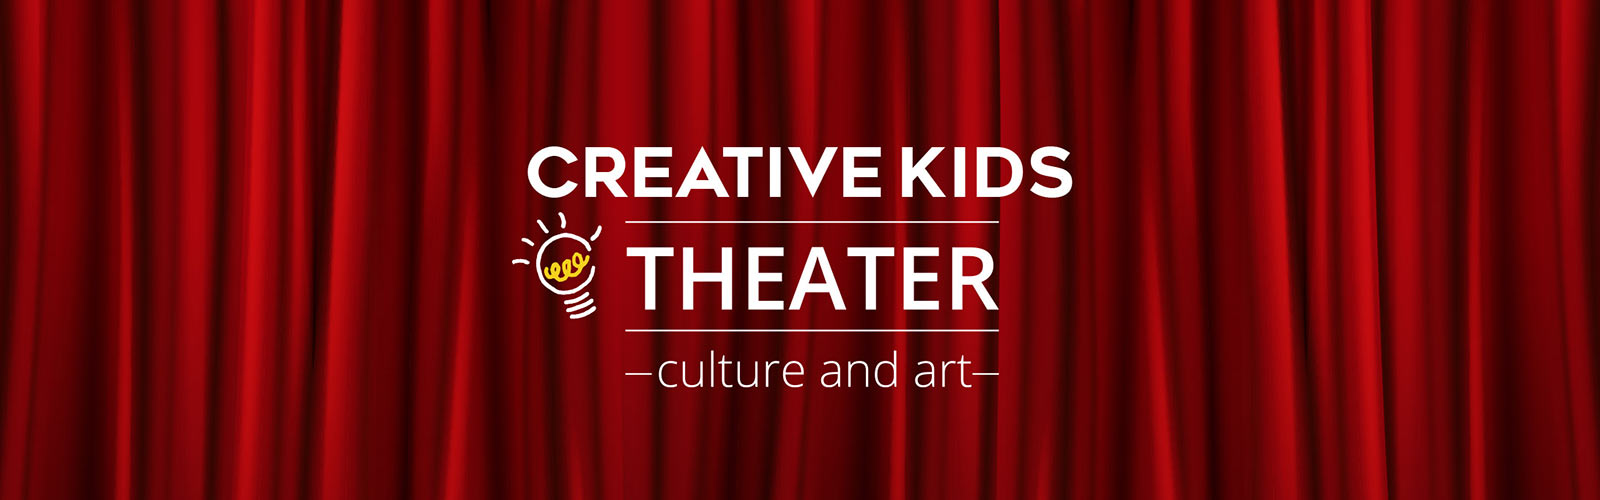 Creative Kids Theater